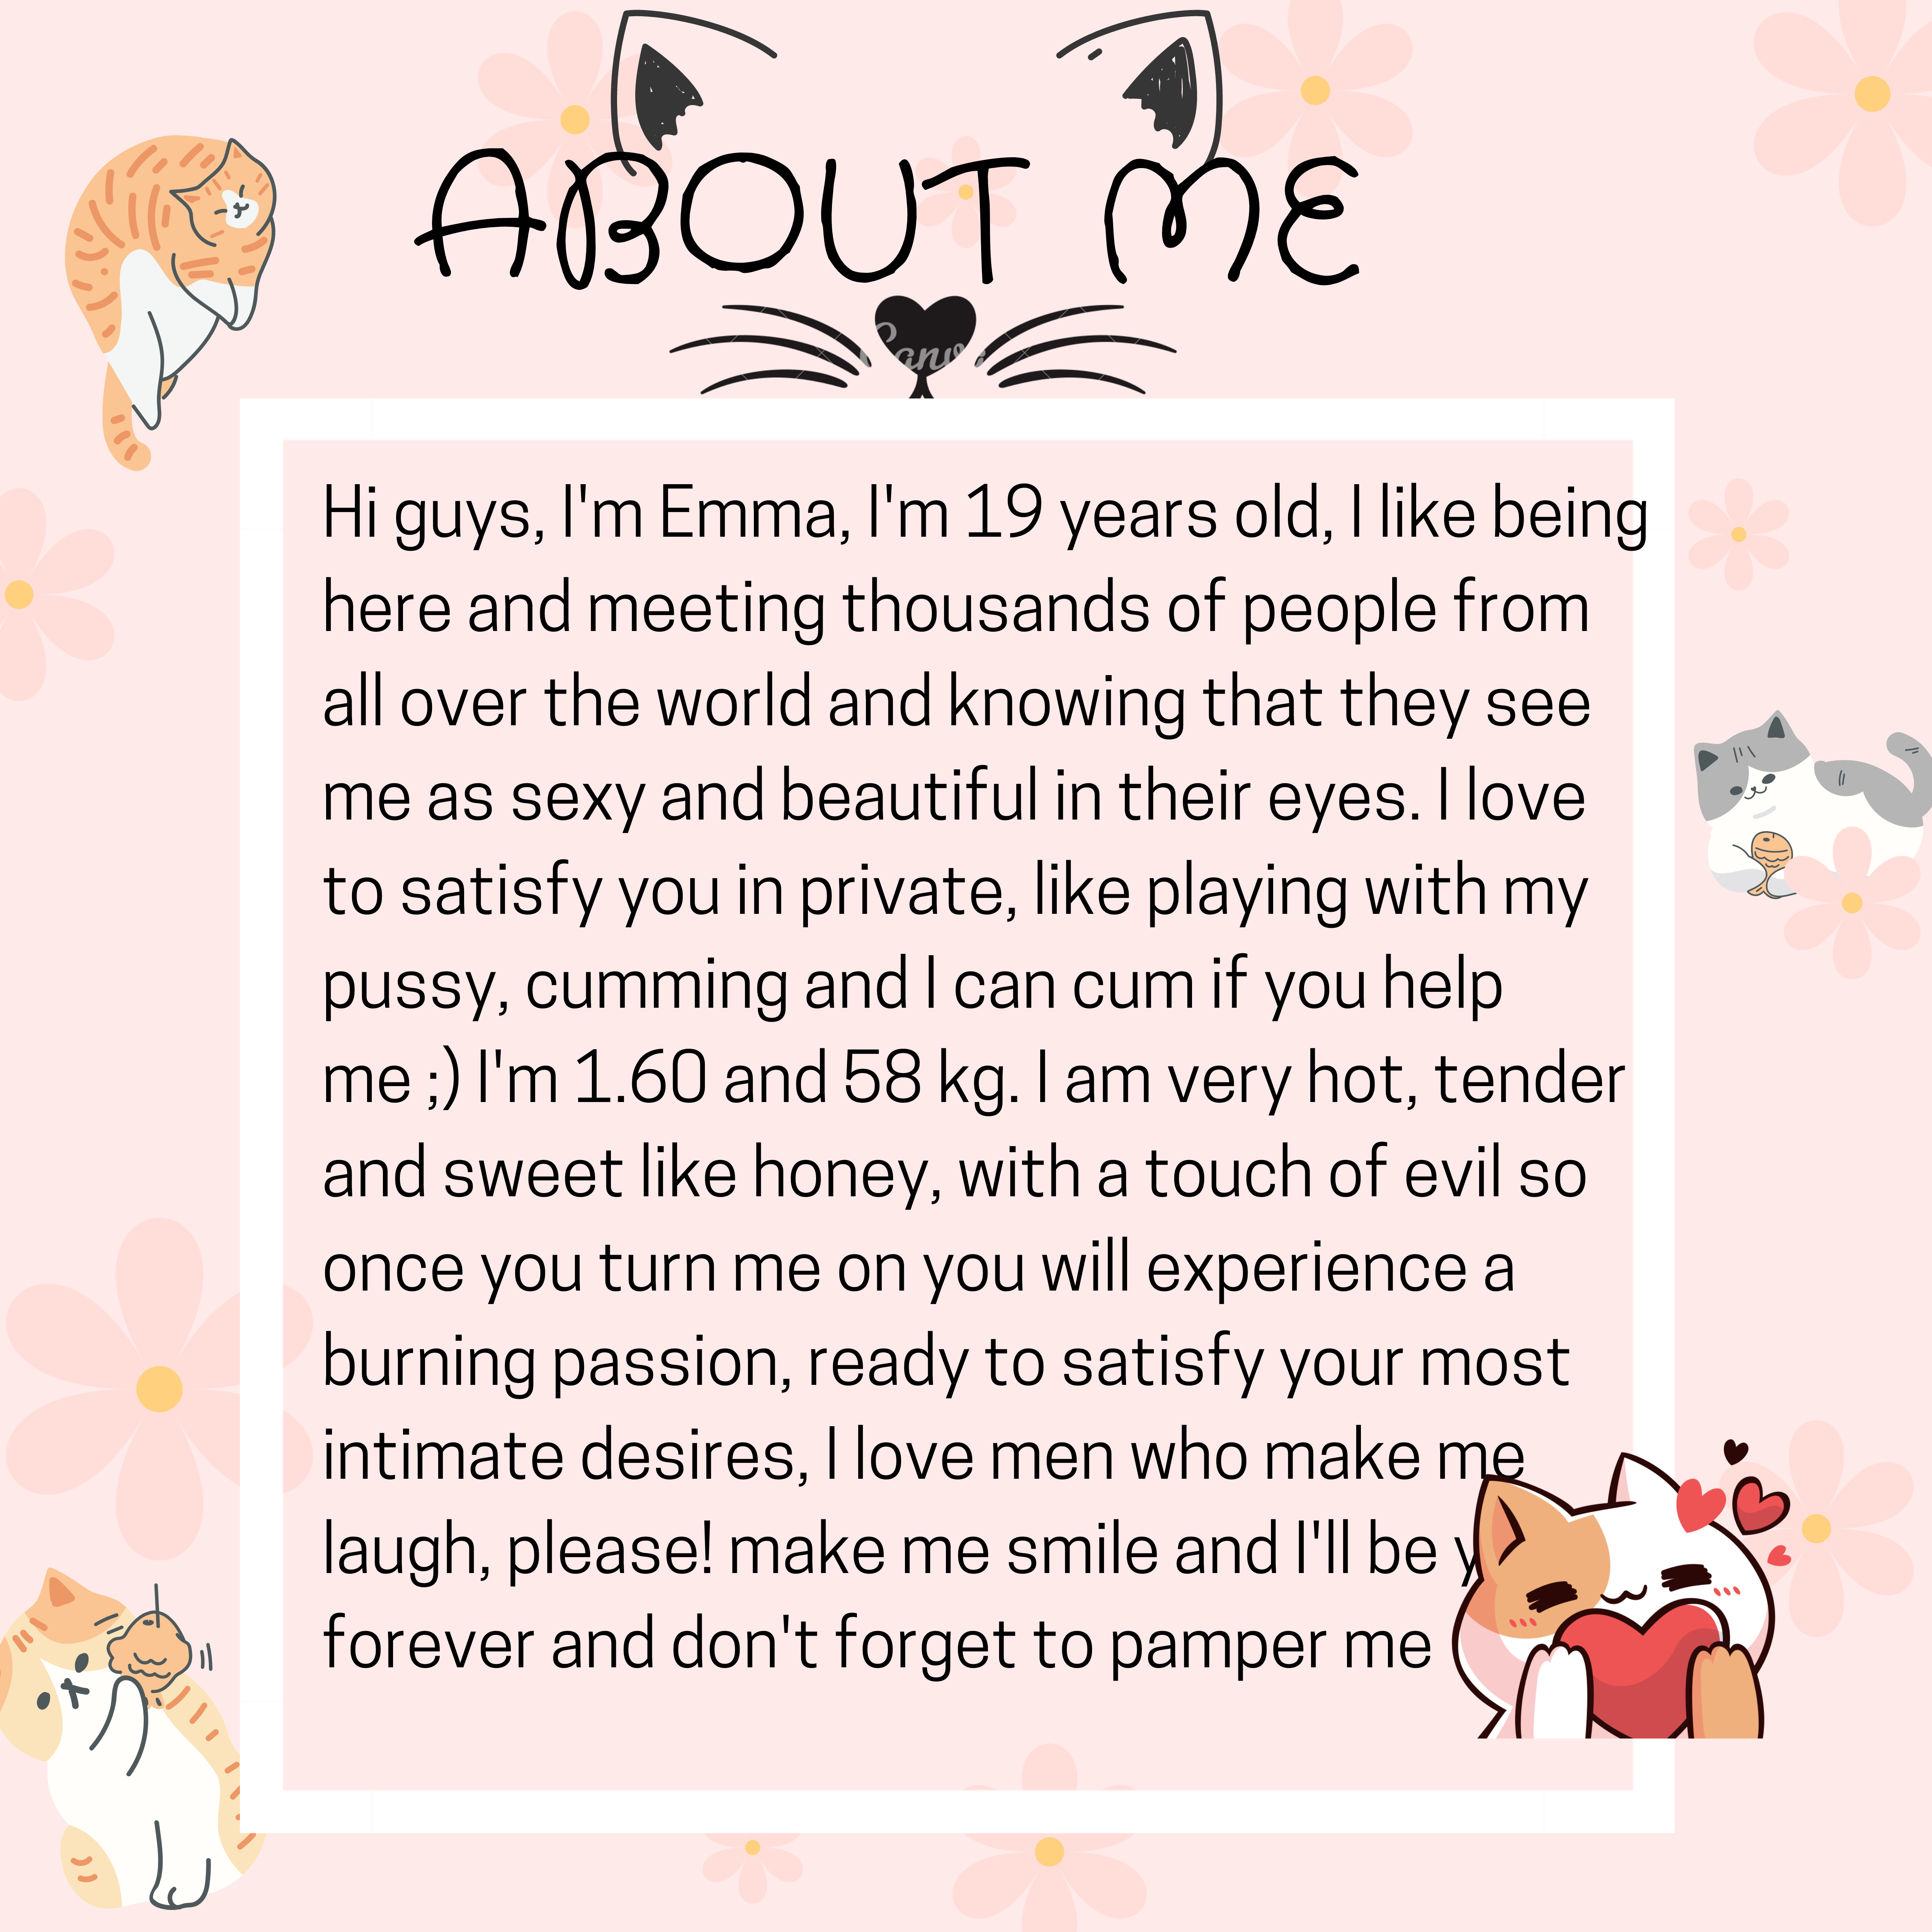 emma-a1 about me image: 1